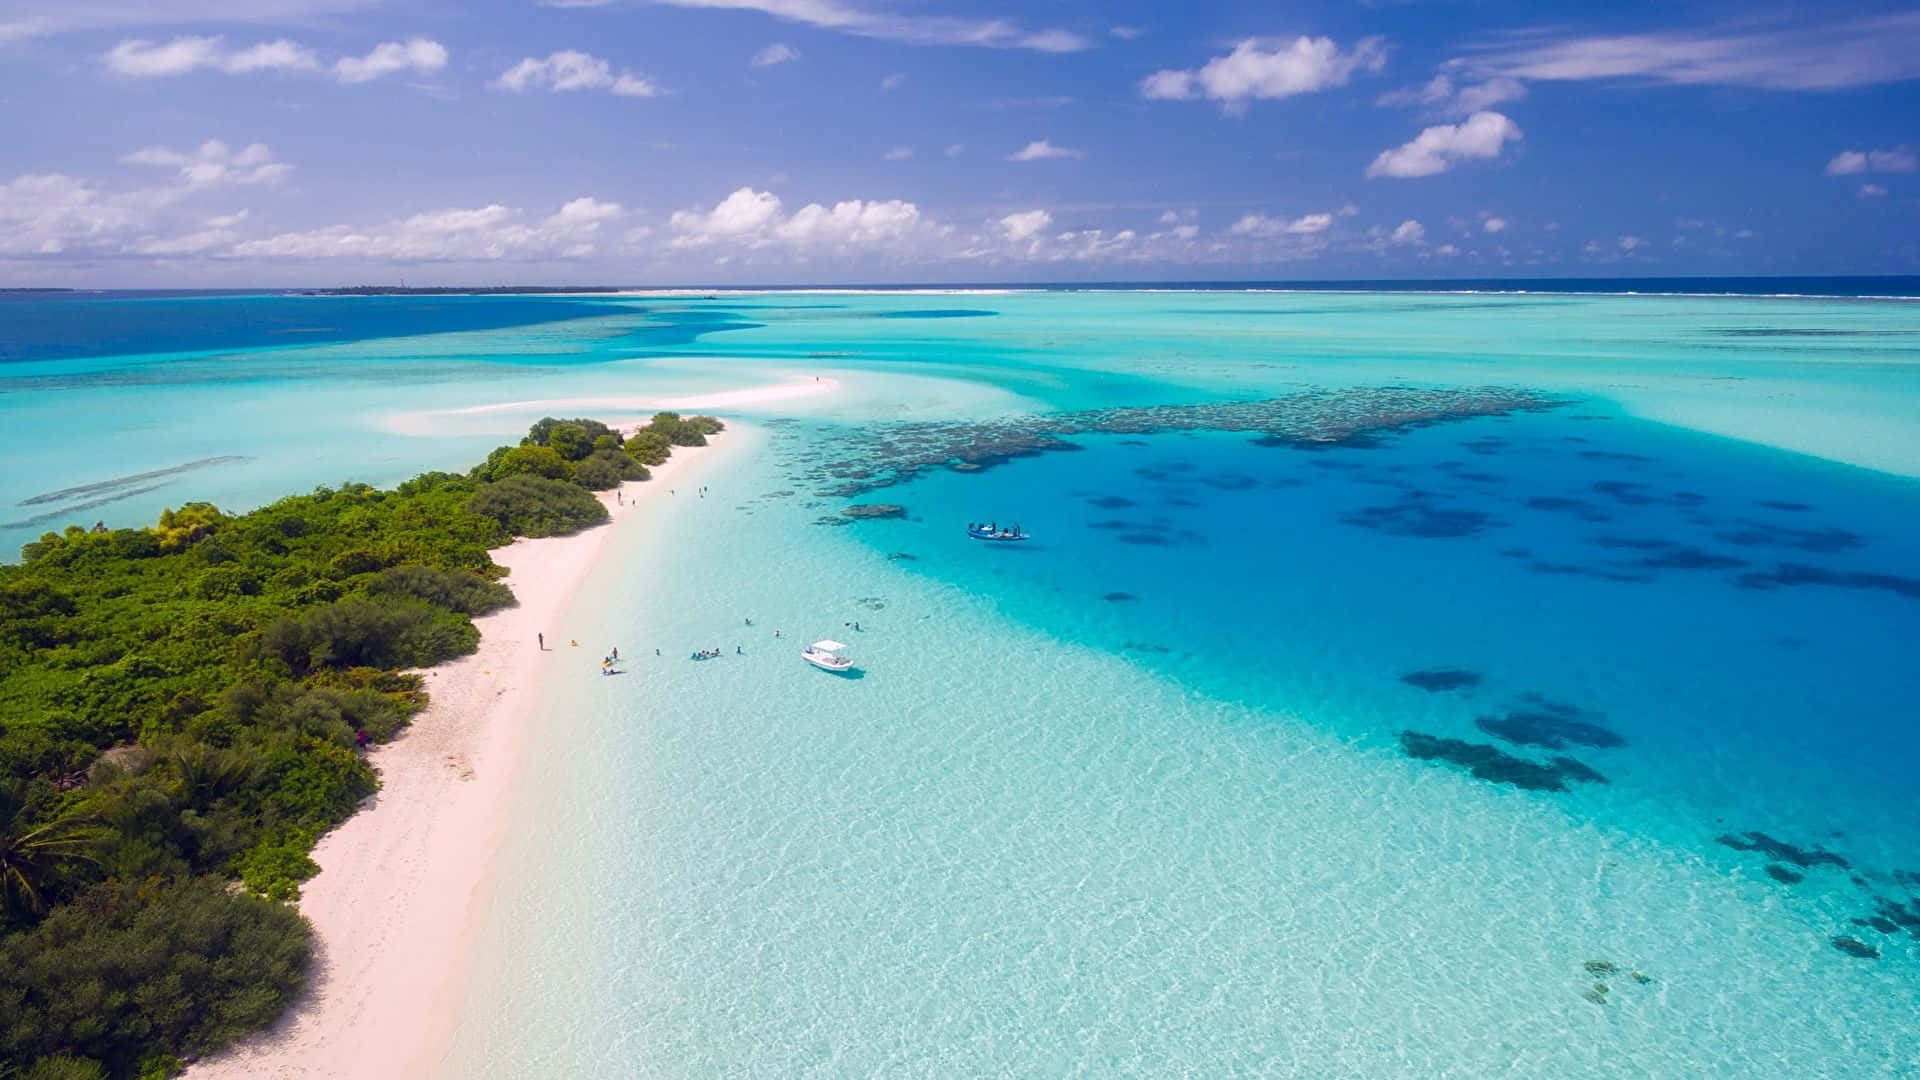 720p Beach Maldives Background